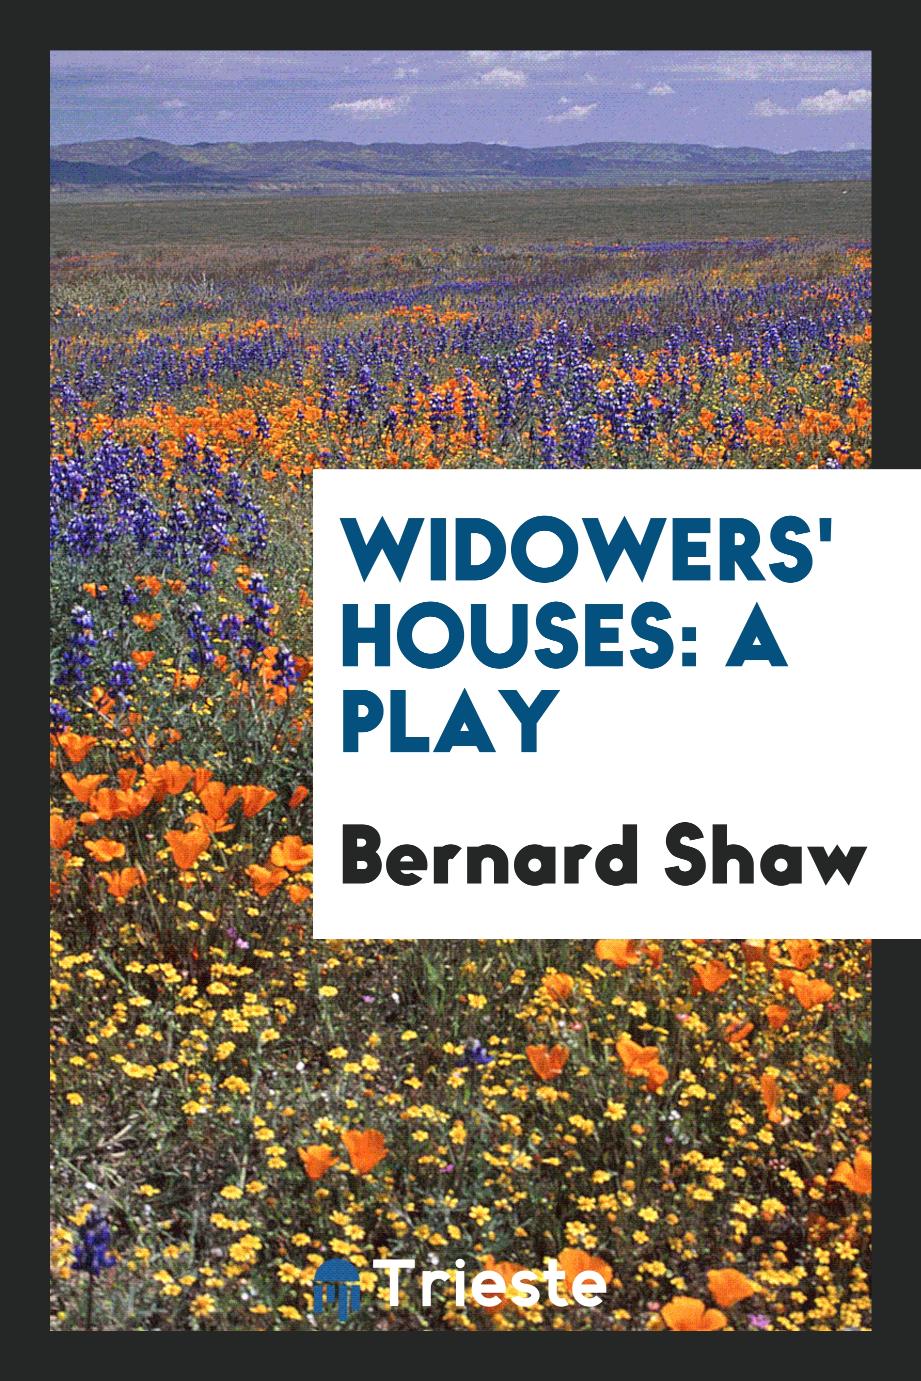 Widowers' houses: a play